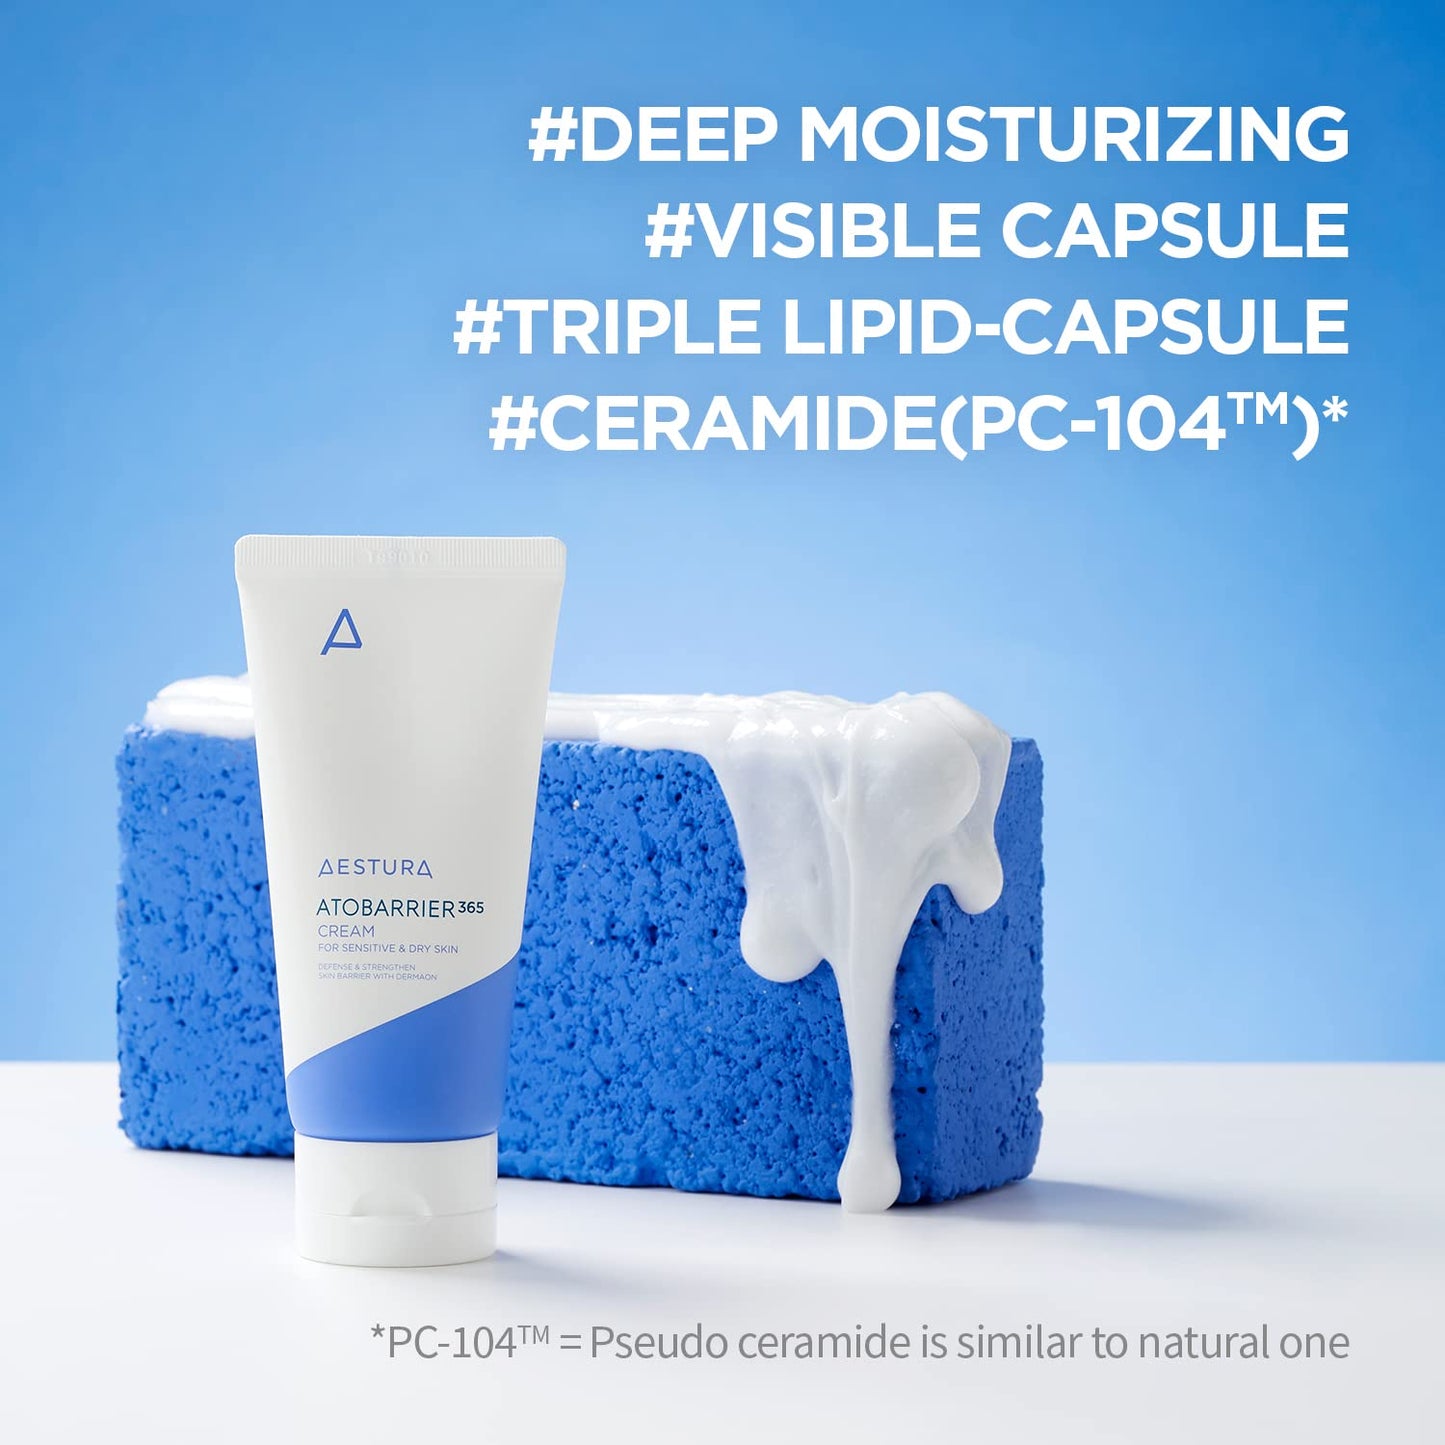 AESTURA ATOBARRIER365 Cream 80ML with Ceramide, Skin Barrier Repair Moisturizer, 100-Hour Lasting Hydration for Dry & Sensitive Skin, Cruelty Free, Hypoallergenic, Korean Skin Care